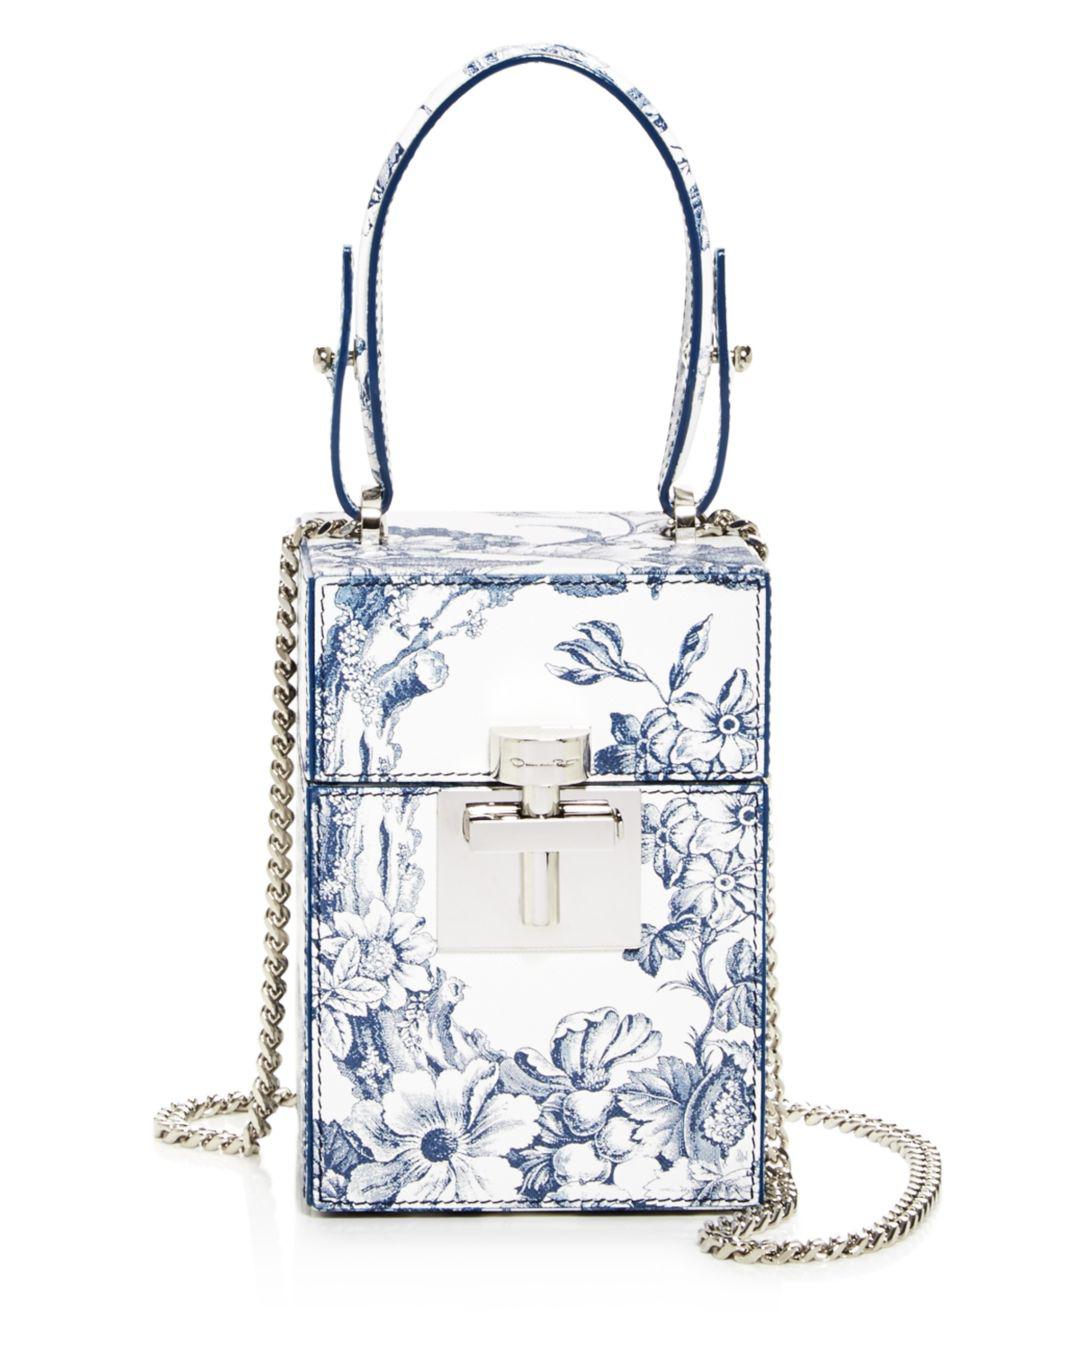 Oscar de la Renta Alibi Floral Leather Box Bag in Blue/Silver (Blue) - Lyst